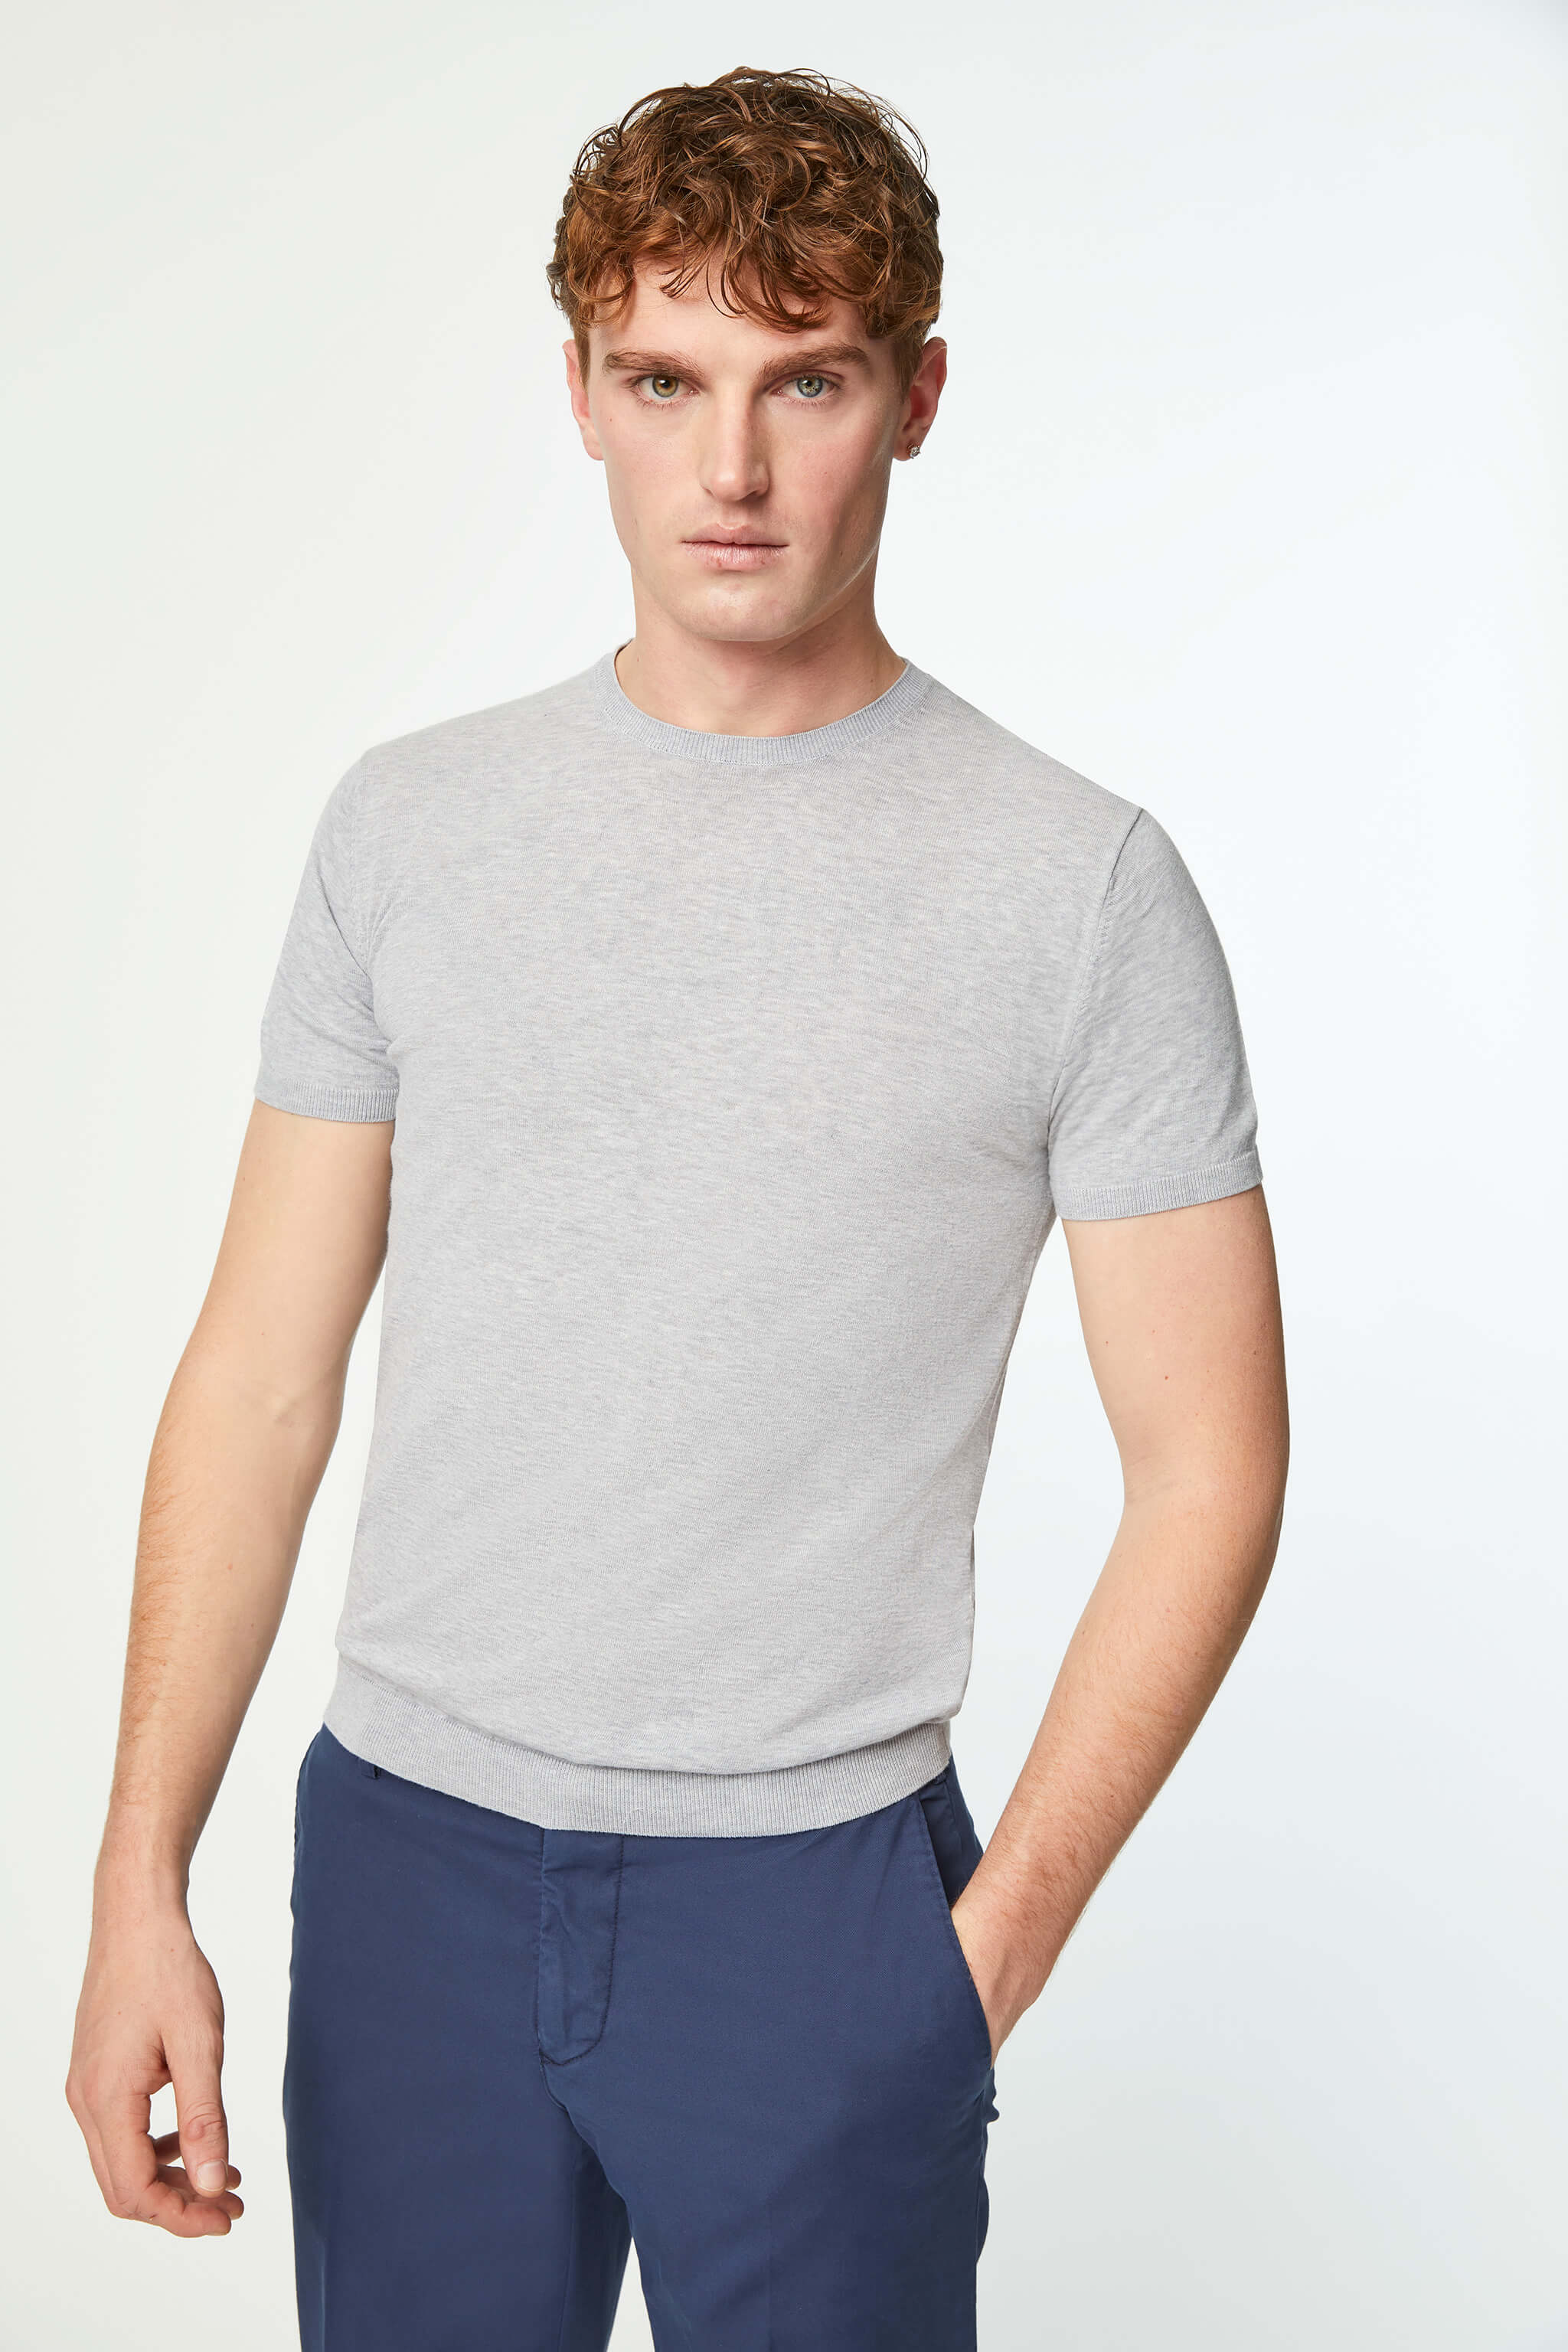 Short sleeve cotton T-shirt in Gray melange